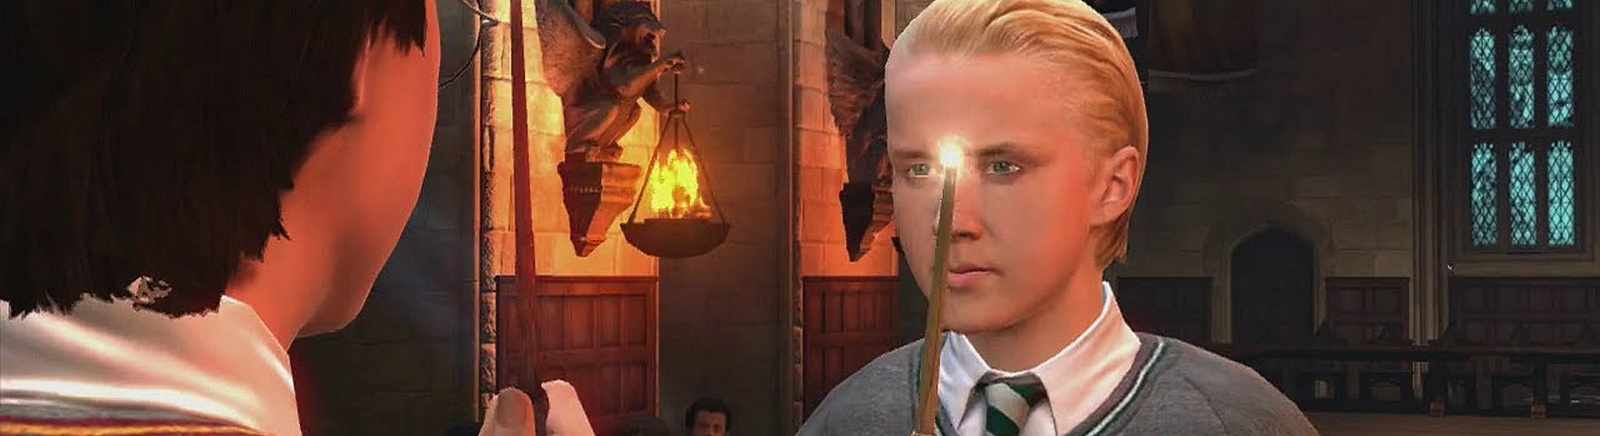 Дата выхода Harry Potter for Kinect  на Xbox 360 в России и во всем мире